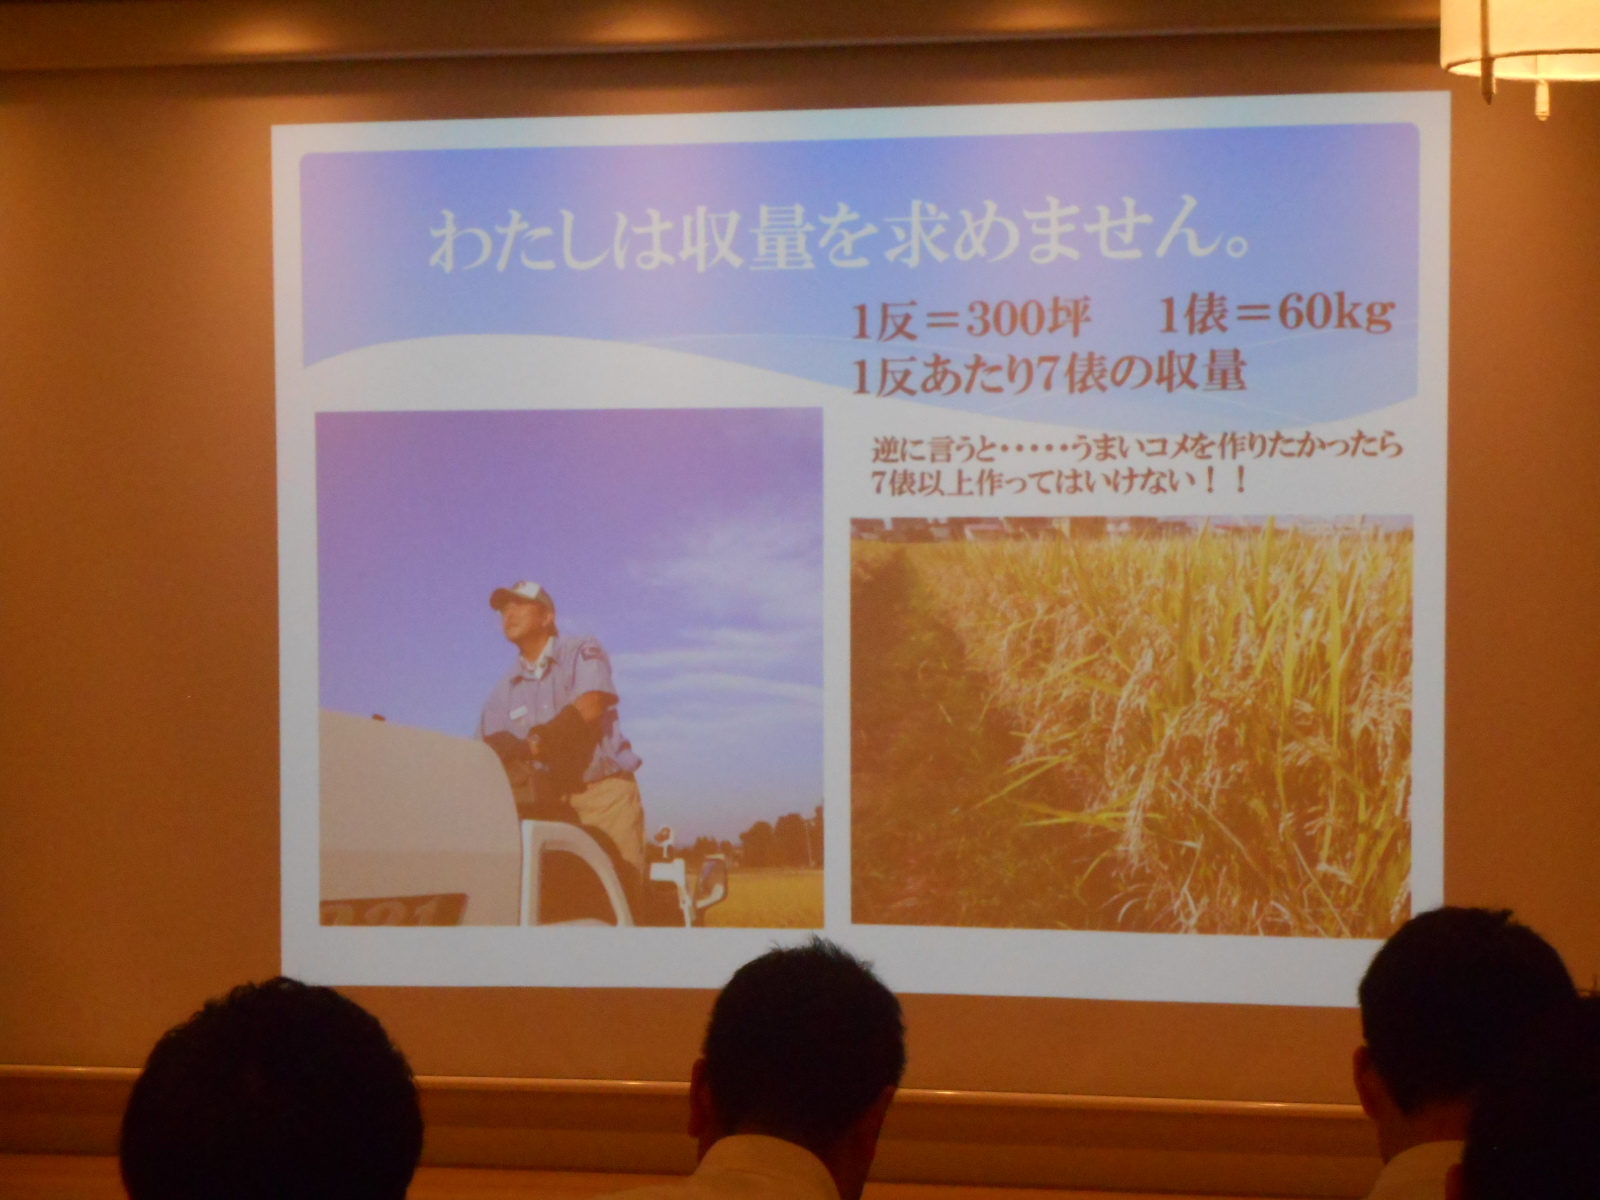 DSCN1833 - AoMoLink〜赤坂〜の第2回勉強会&交流会開催します。